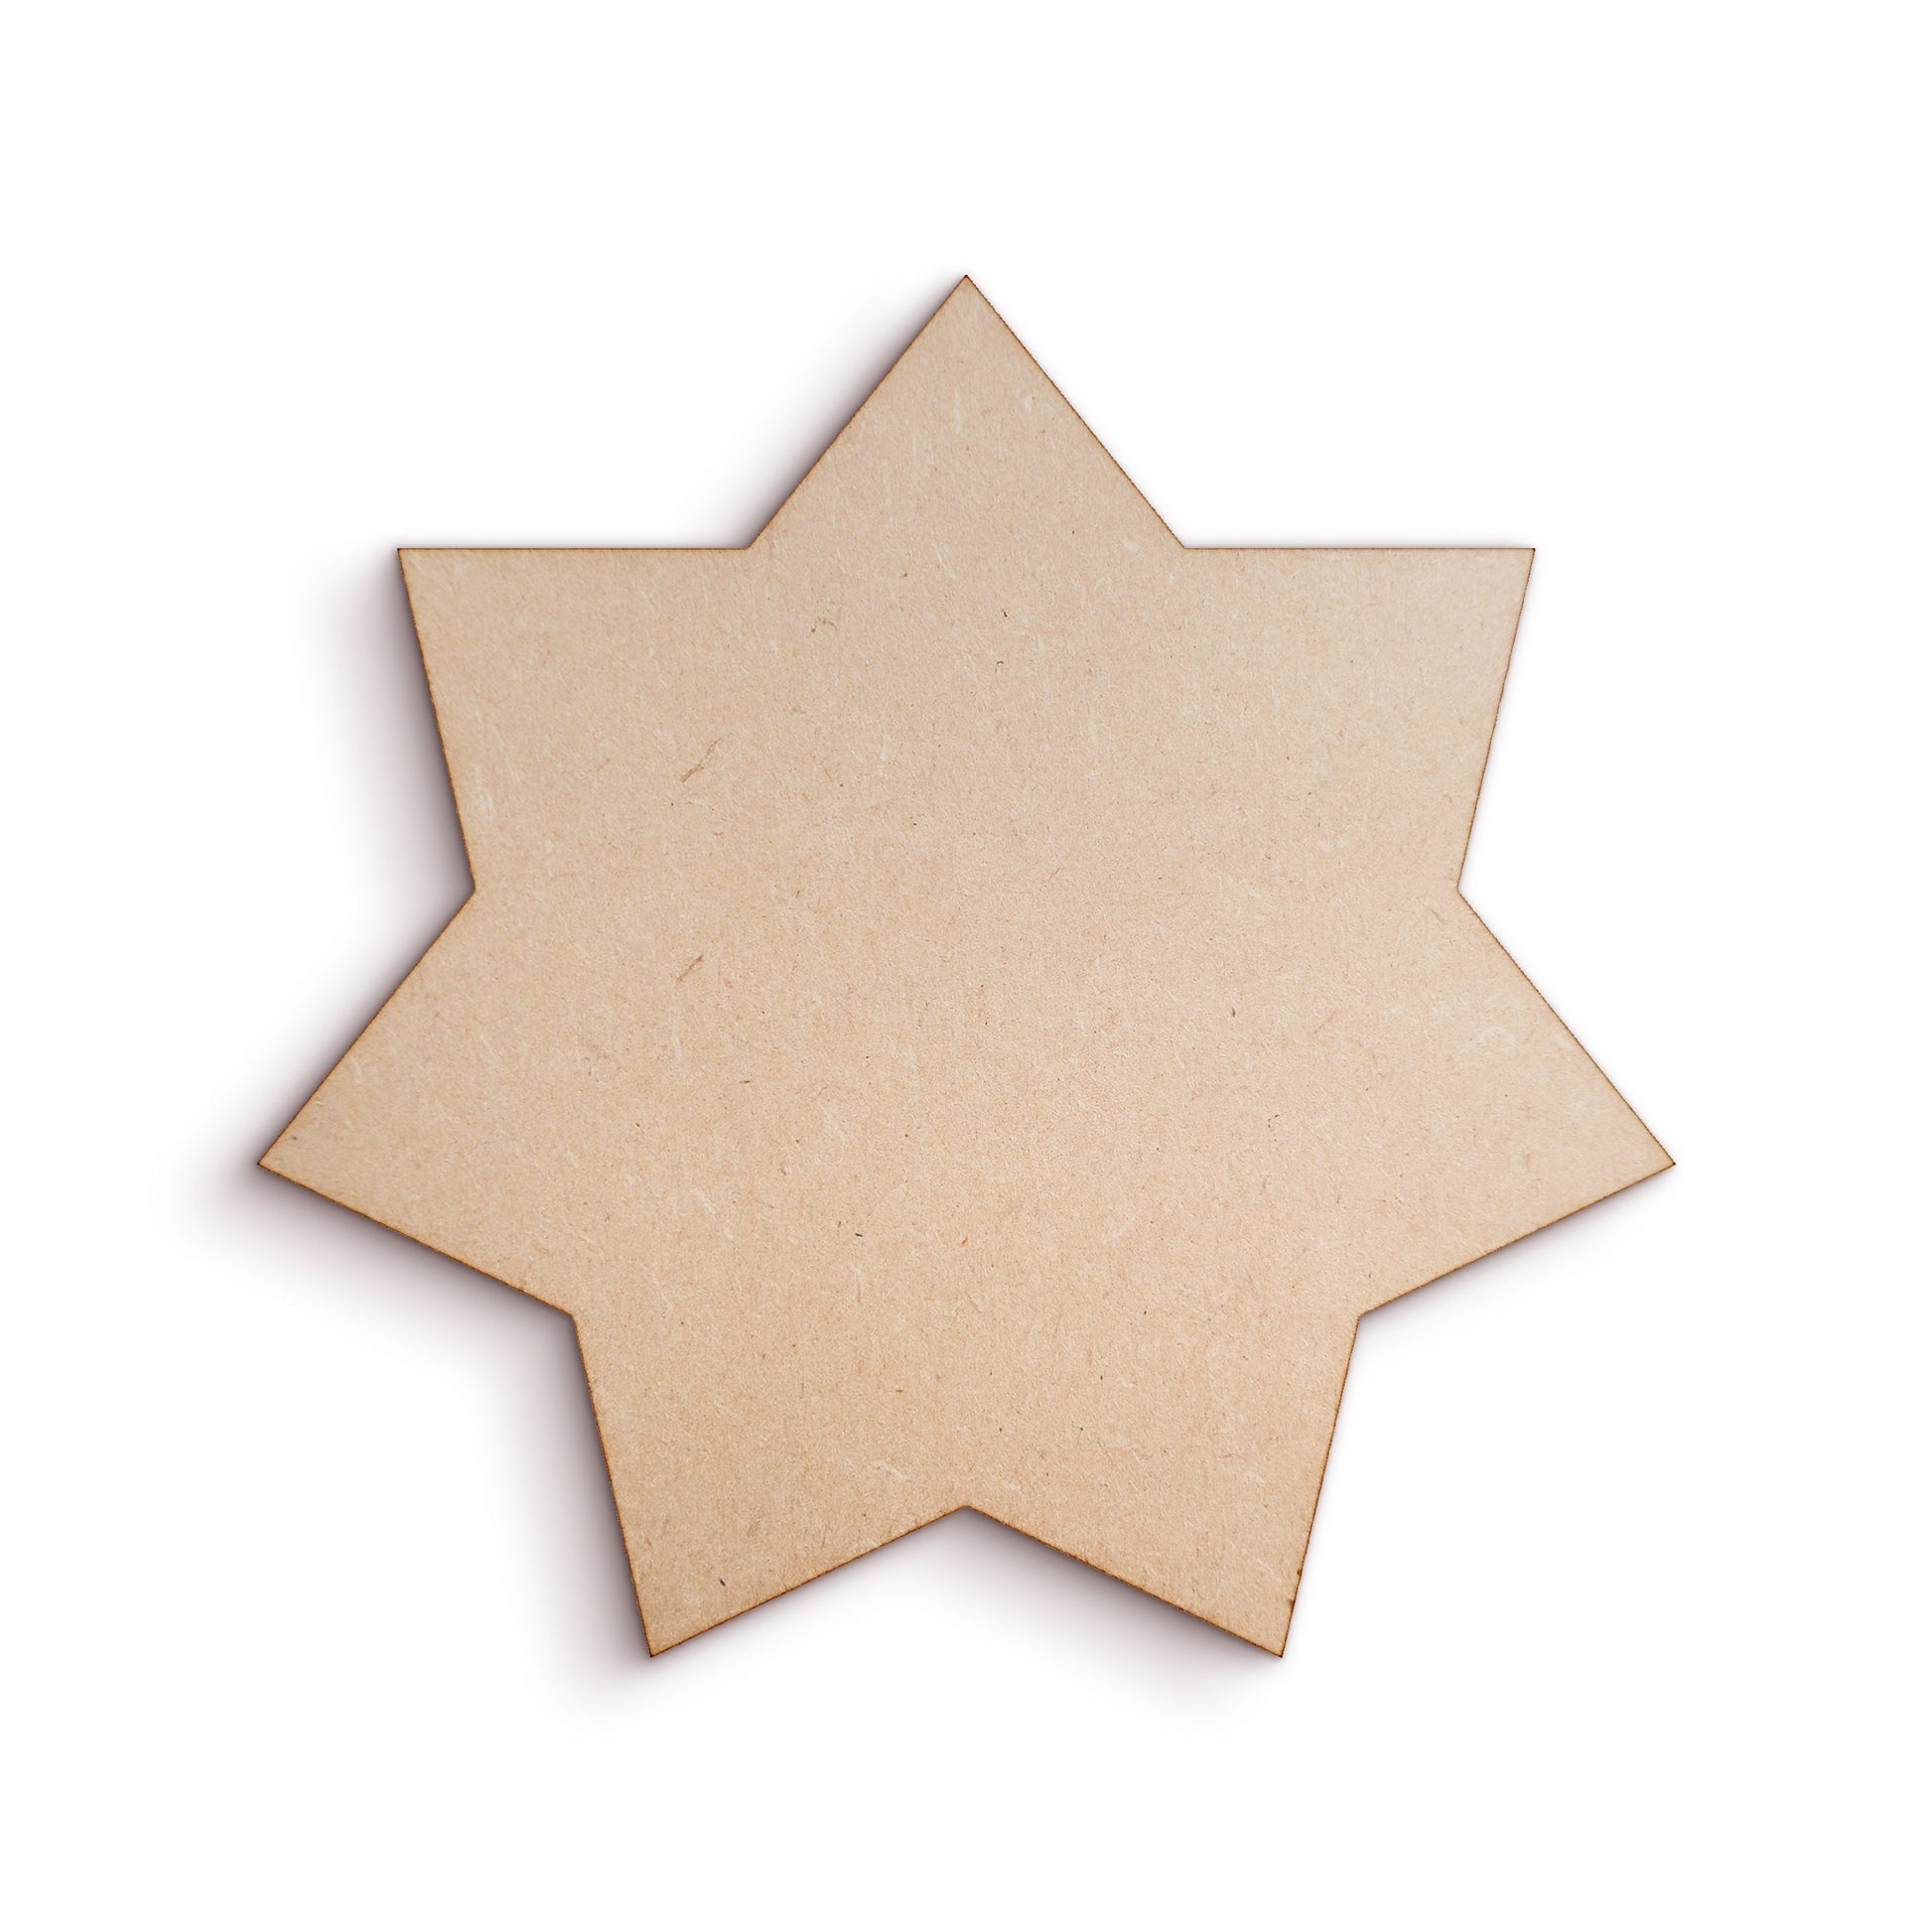 Star wood craft shape SKU643608